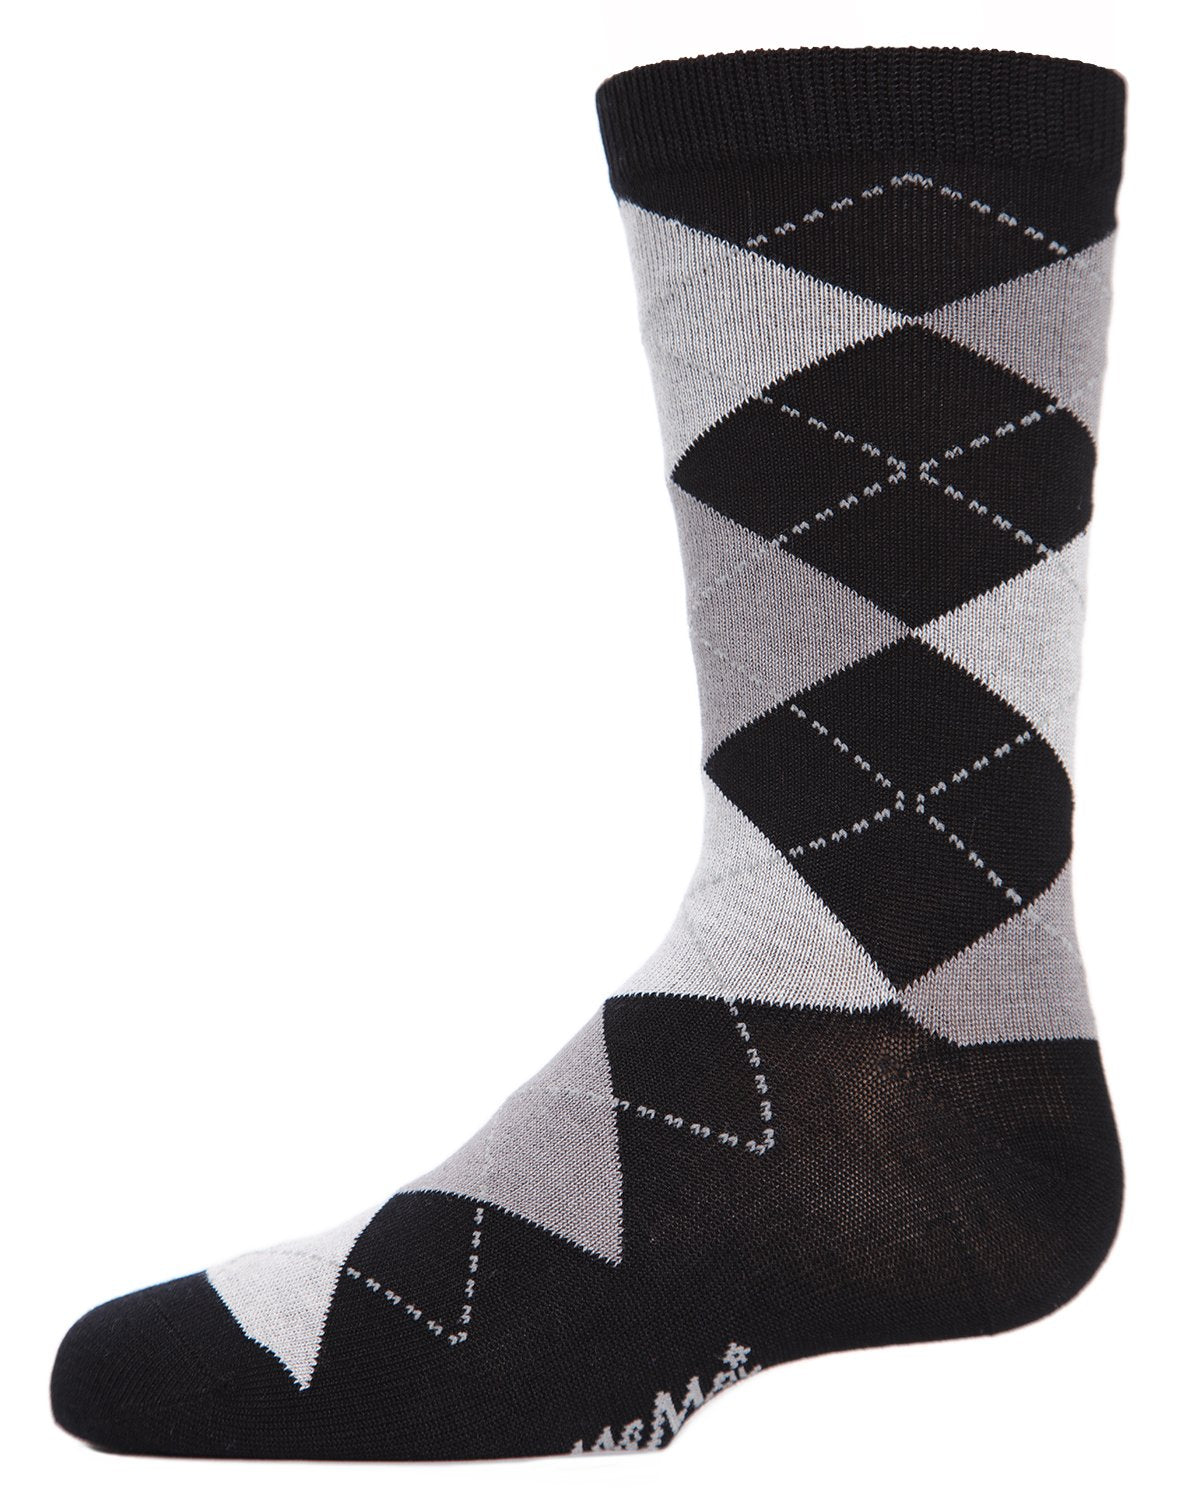 Boy's Classic Argyle Mercerized Cotton Blend Crew Socks